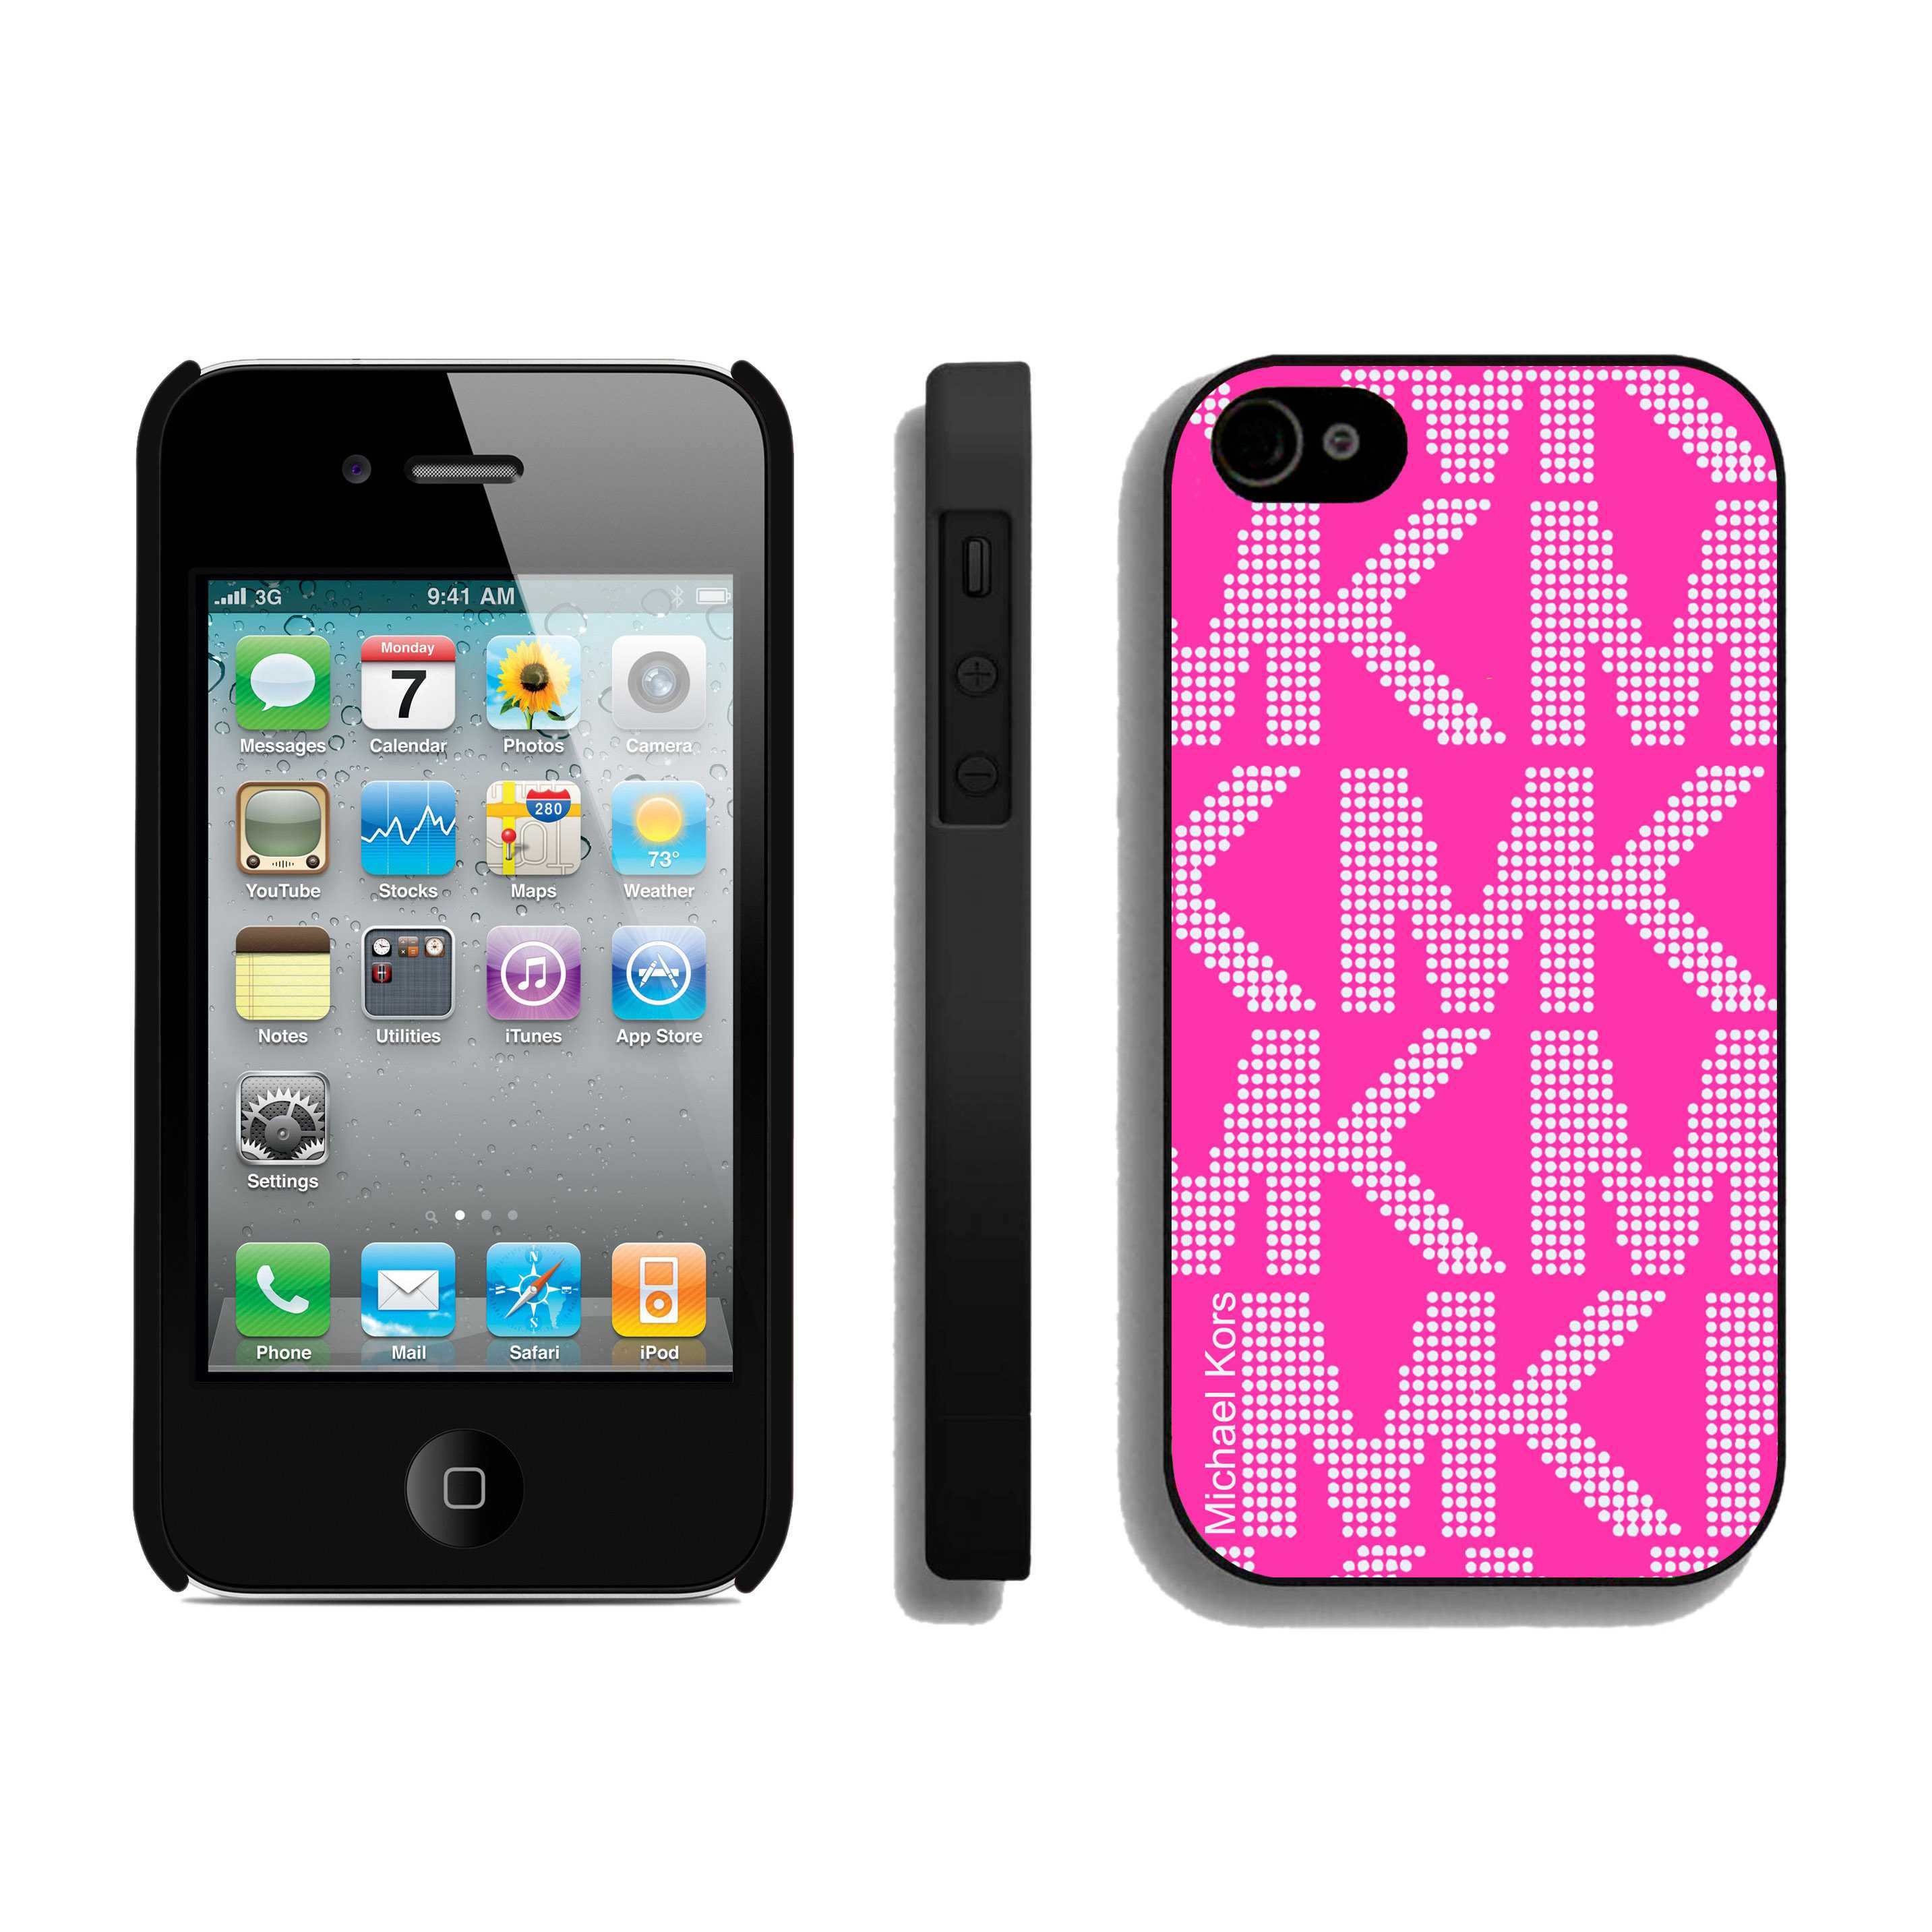 Michael Kors Big Logo Signature Pink iPhone 4 Cases